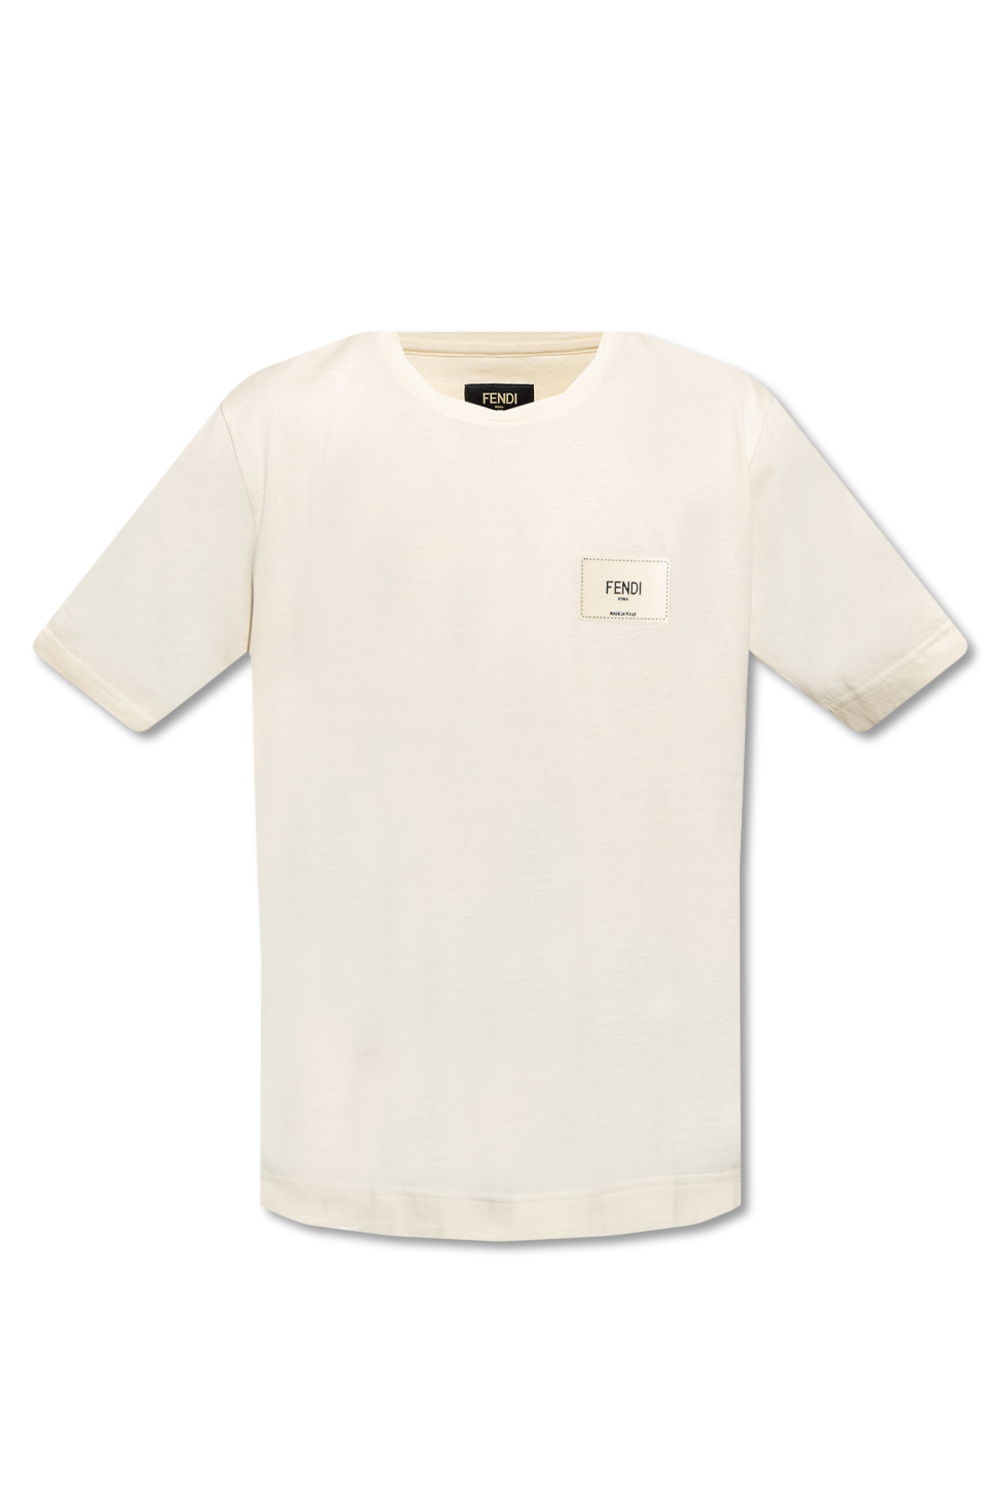 Fendi T-shirt with logo patches | Men's Clothing | Vitkac